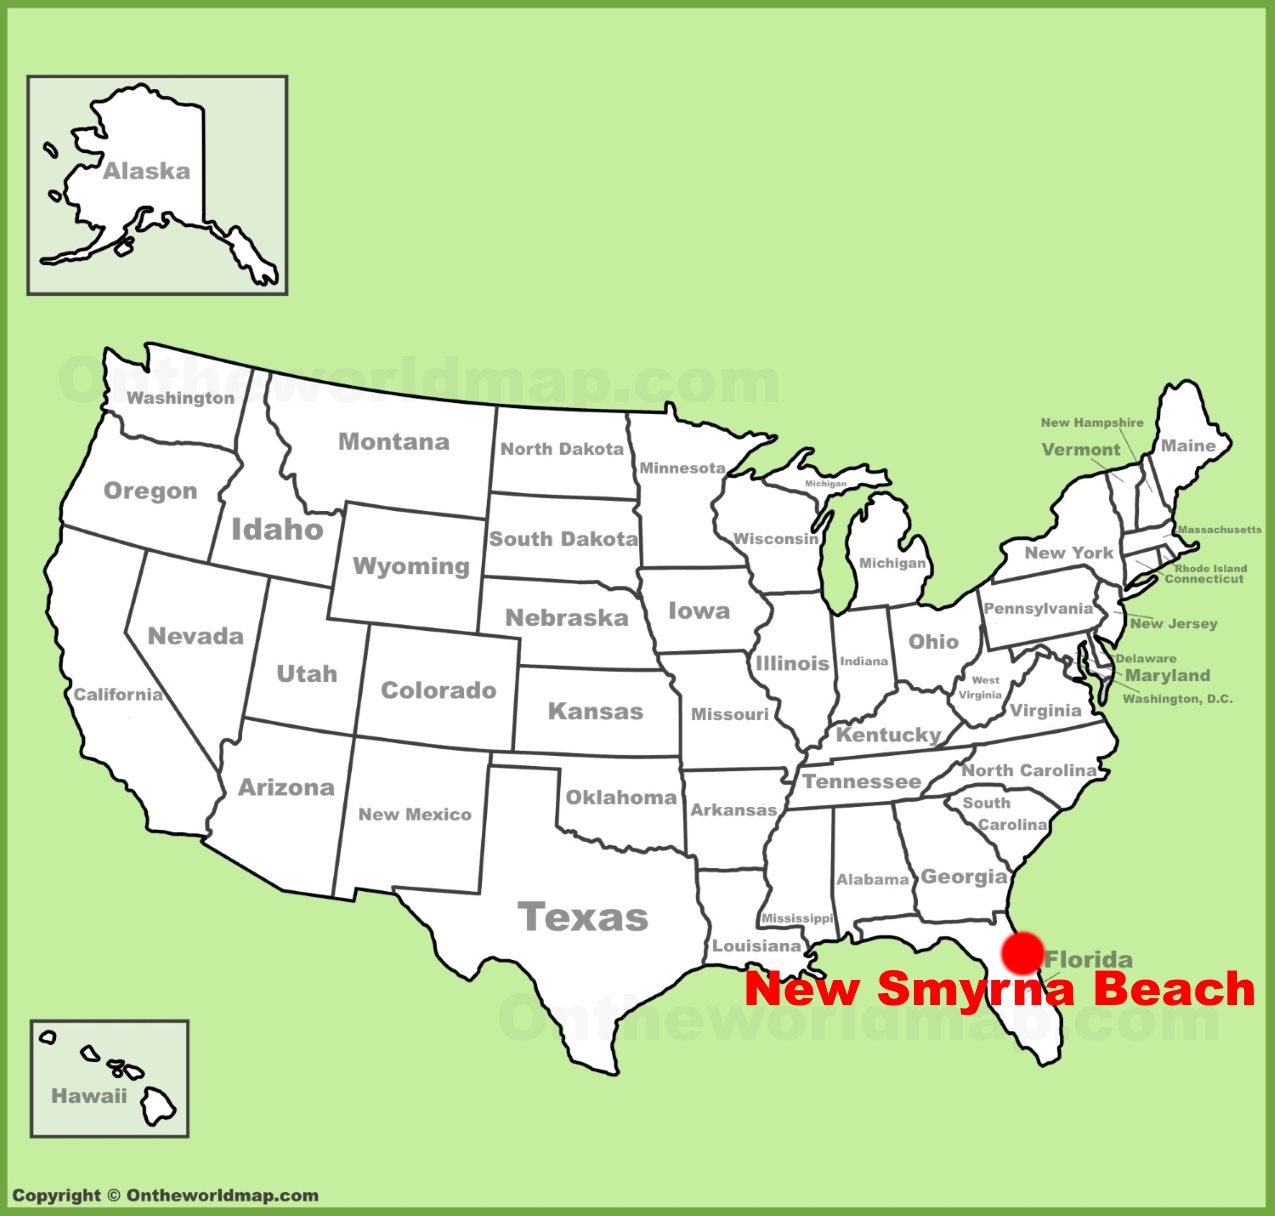 New Smyrna Beach Location On The U S Map